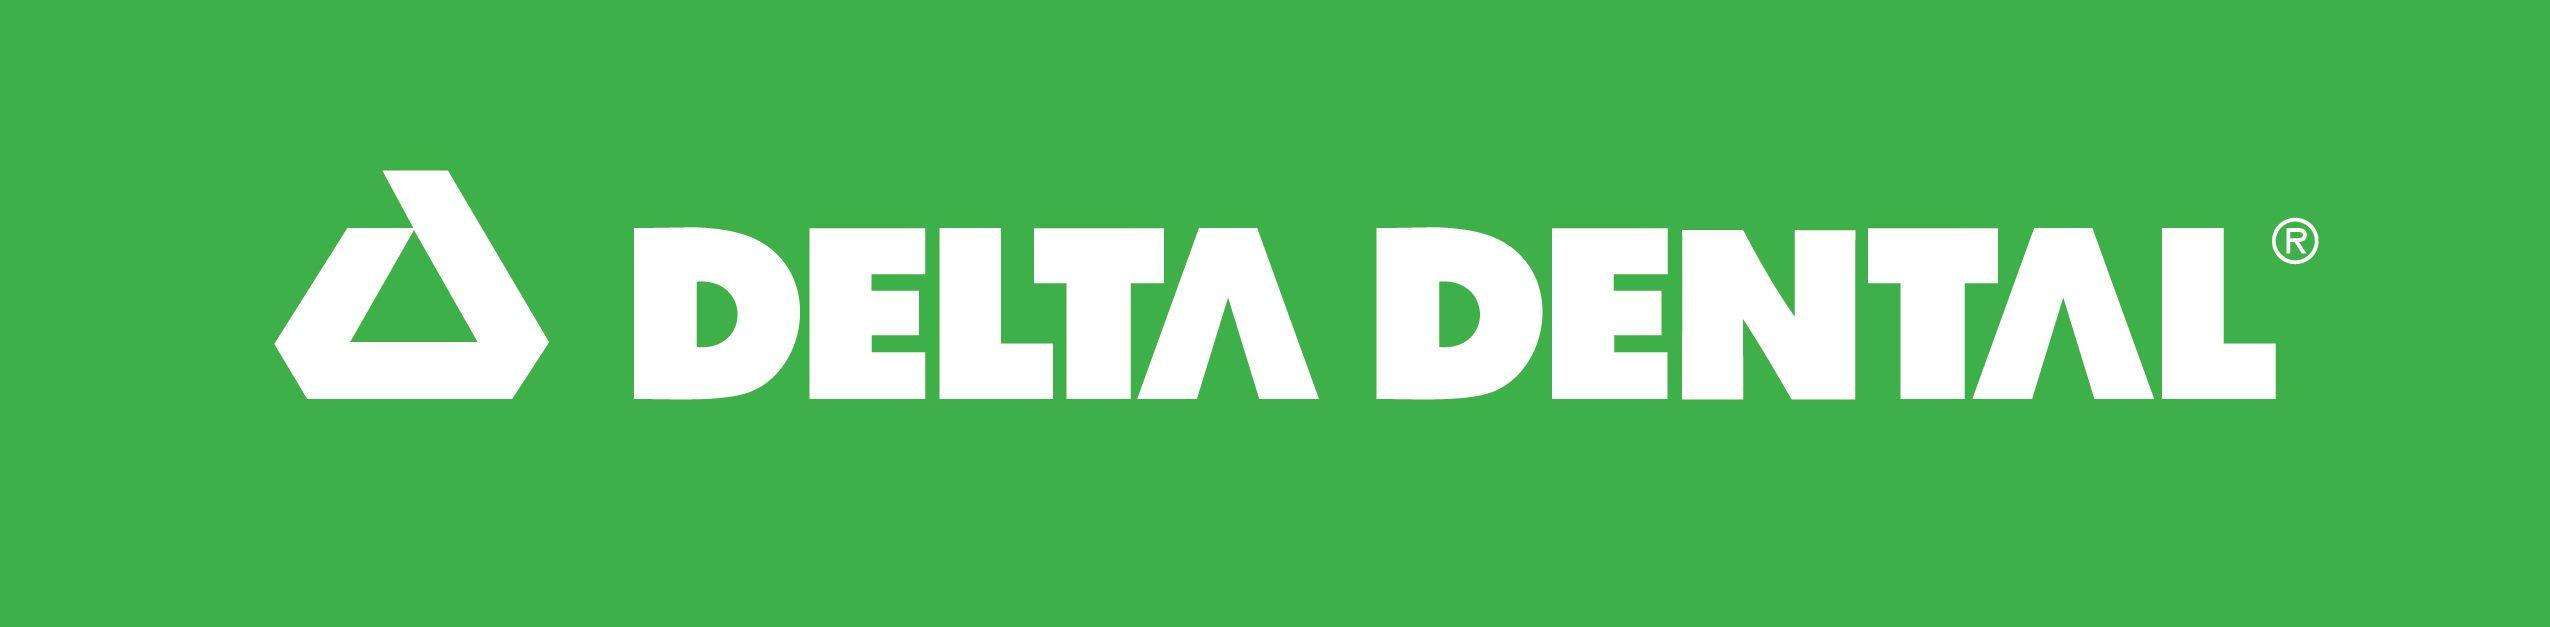 PPO Logo - Logo Usage | Delta Dental